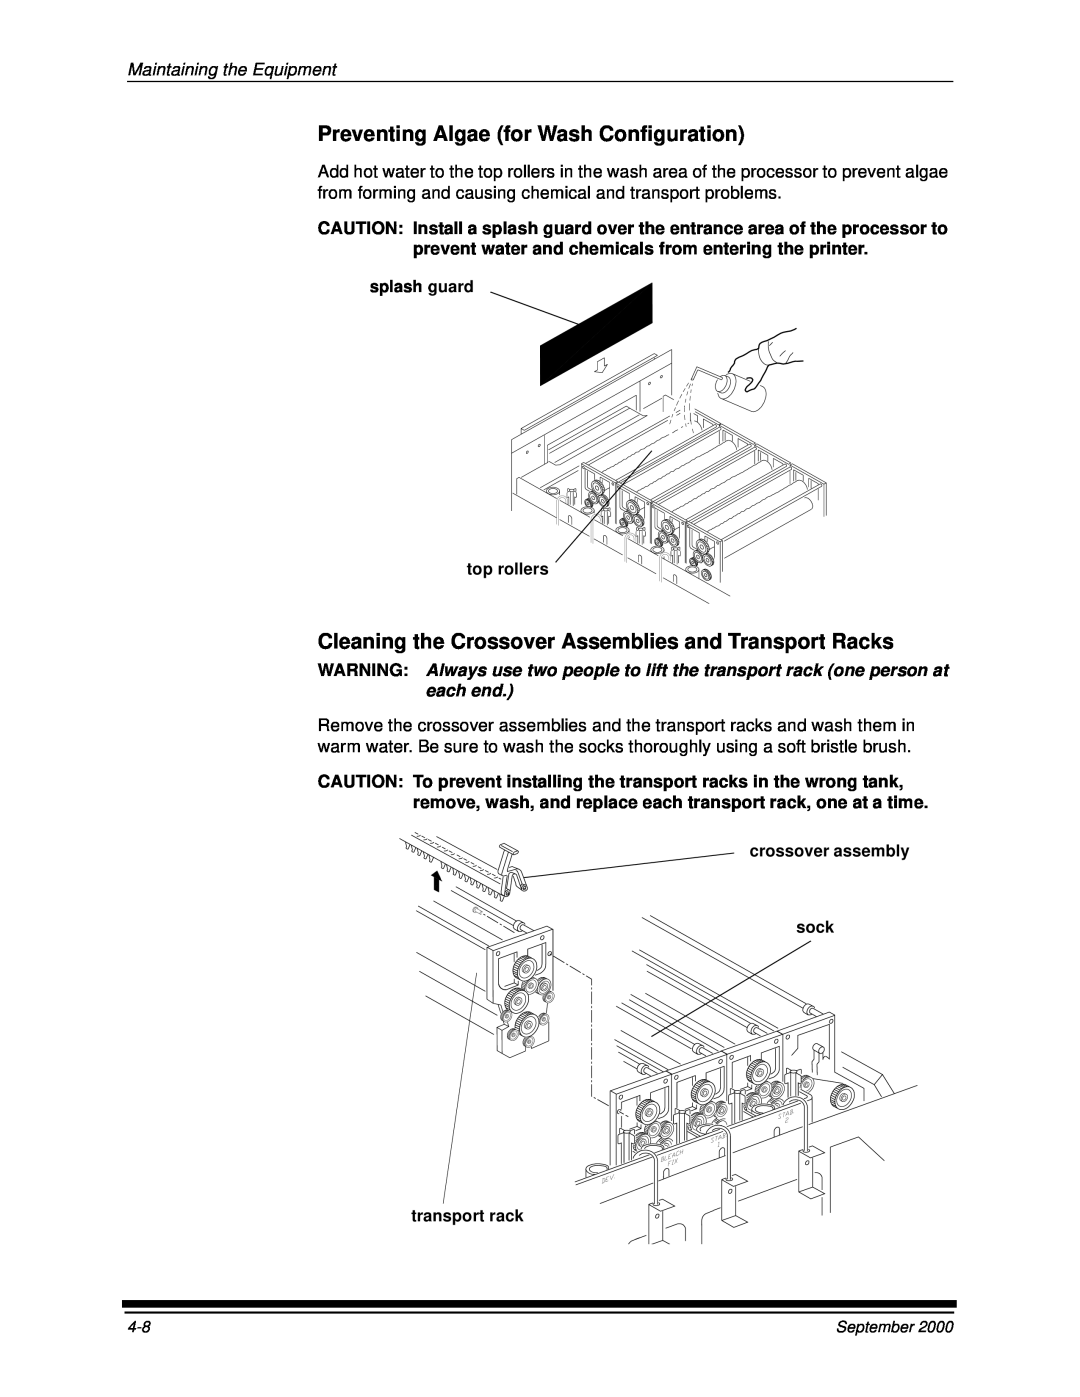 Kodak 20P manual Preventing Algae for Wash Configuration, Maintaining the Equipment, splash guard top rollers 